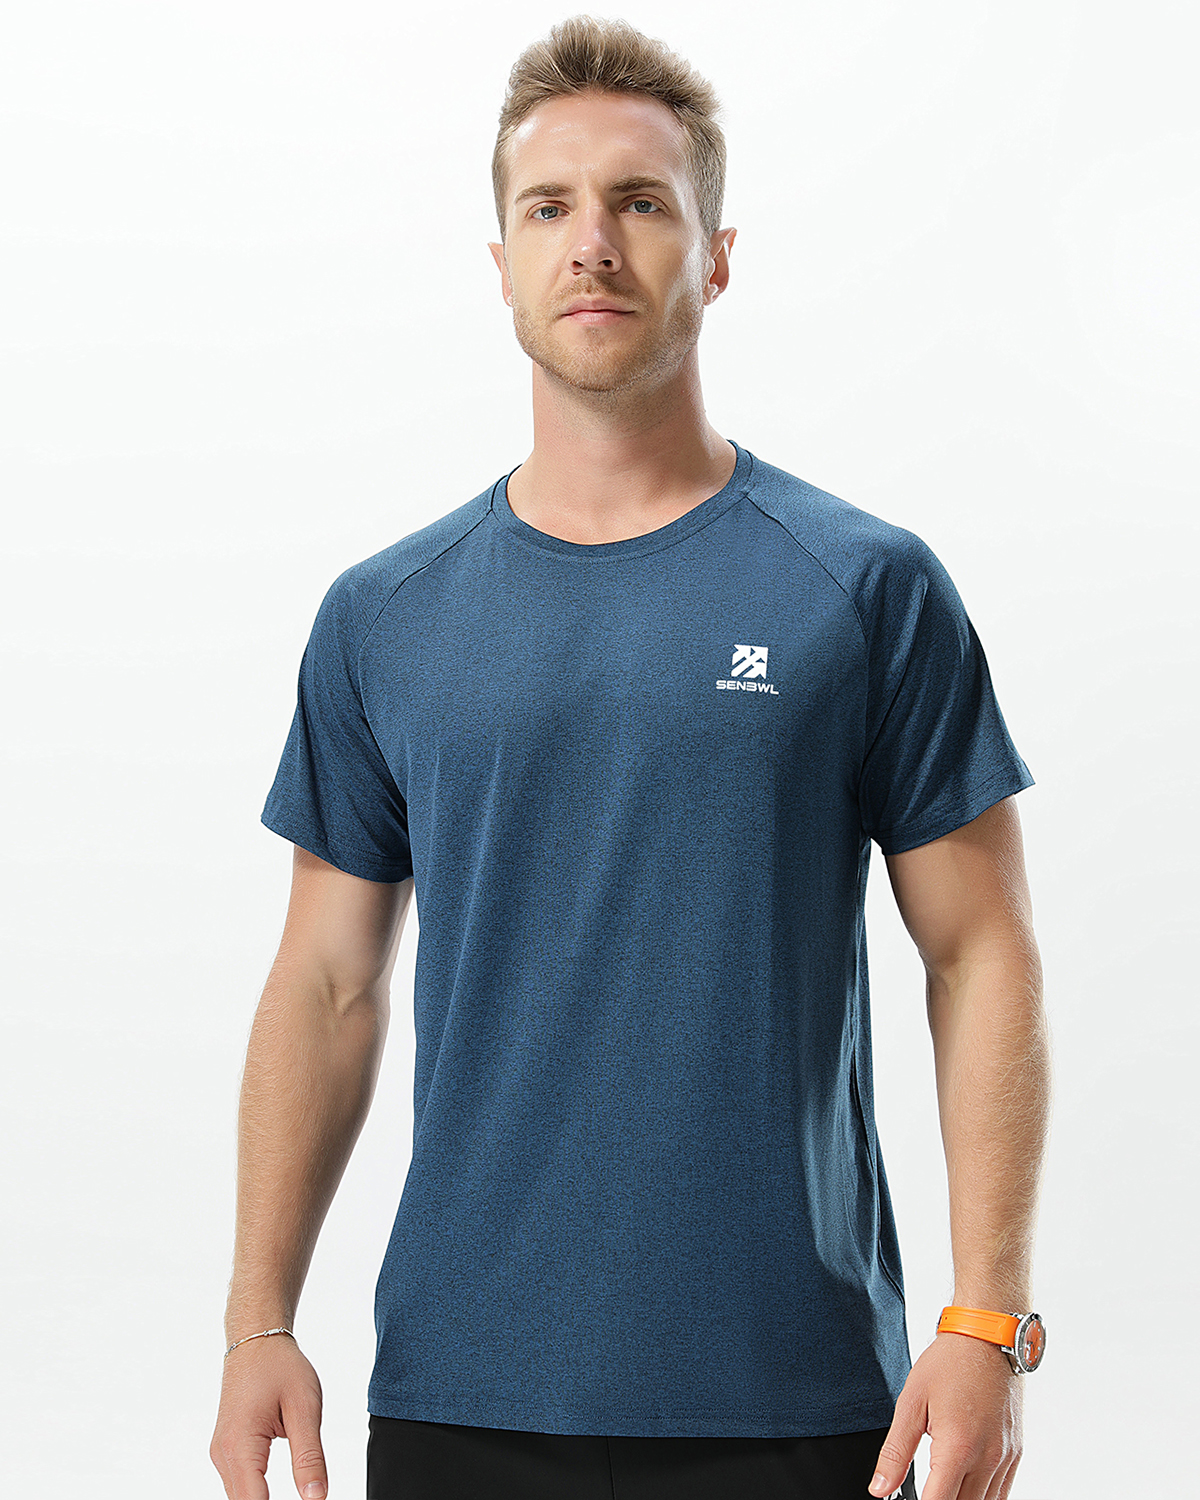 Senbwl Men's Breathable Cationic Sports T-Shirt-Senbwl Sports